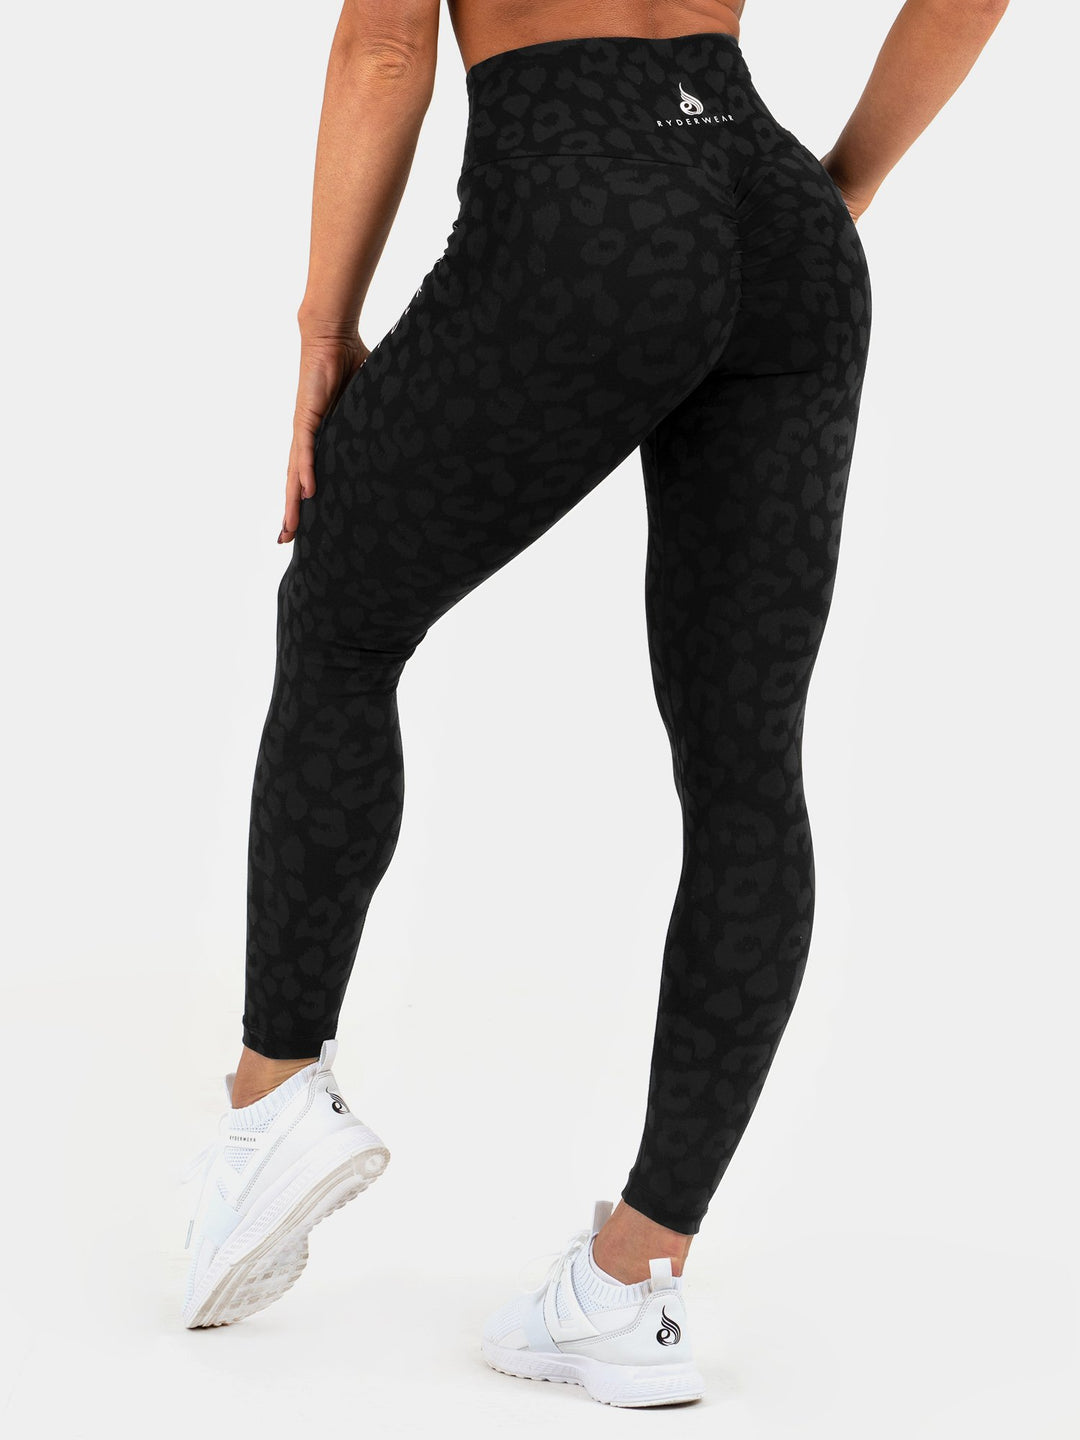 Instinct Scrunch Bum Leggings - Leopard Black - Ryderwear